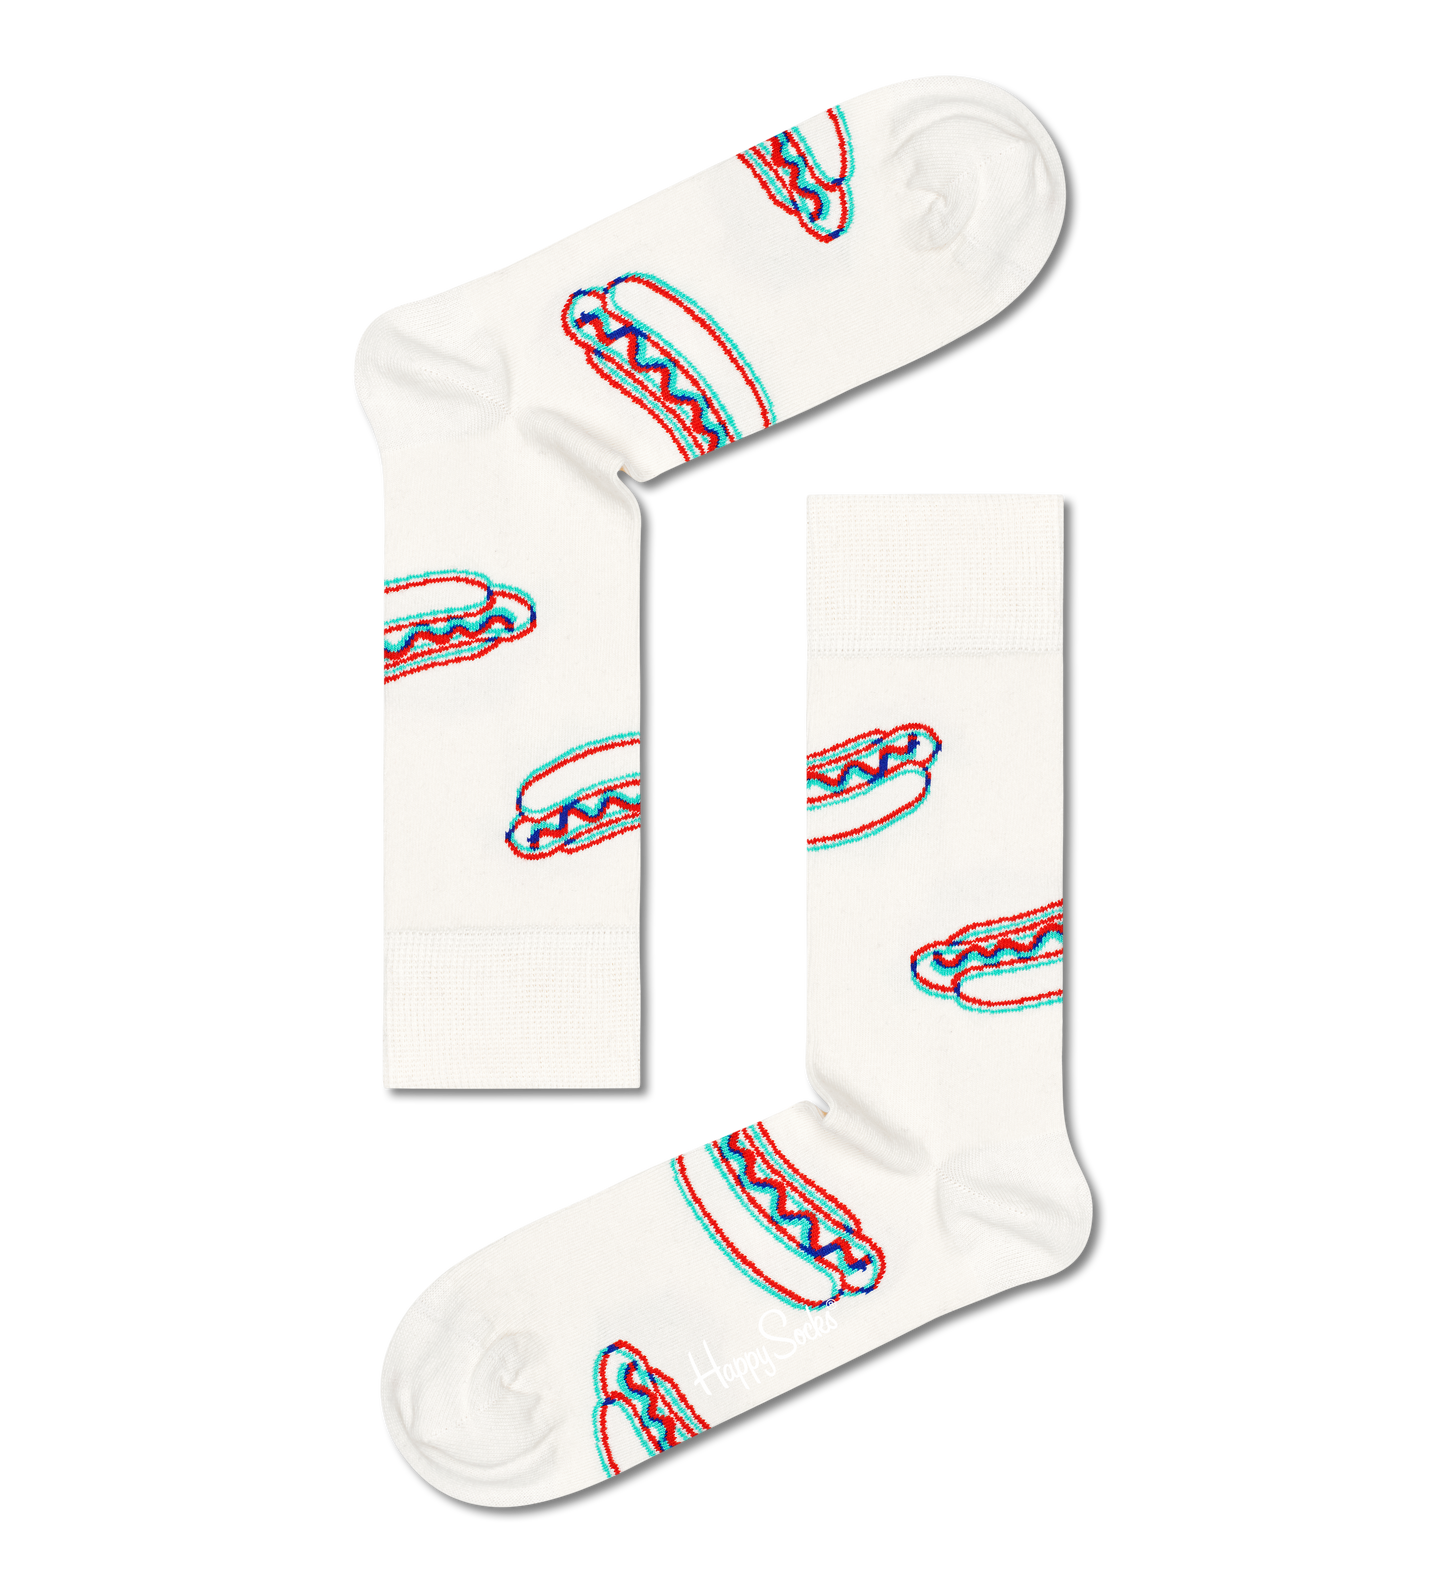 Hot Dog Sock Adult Sock Size (41-46)